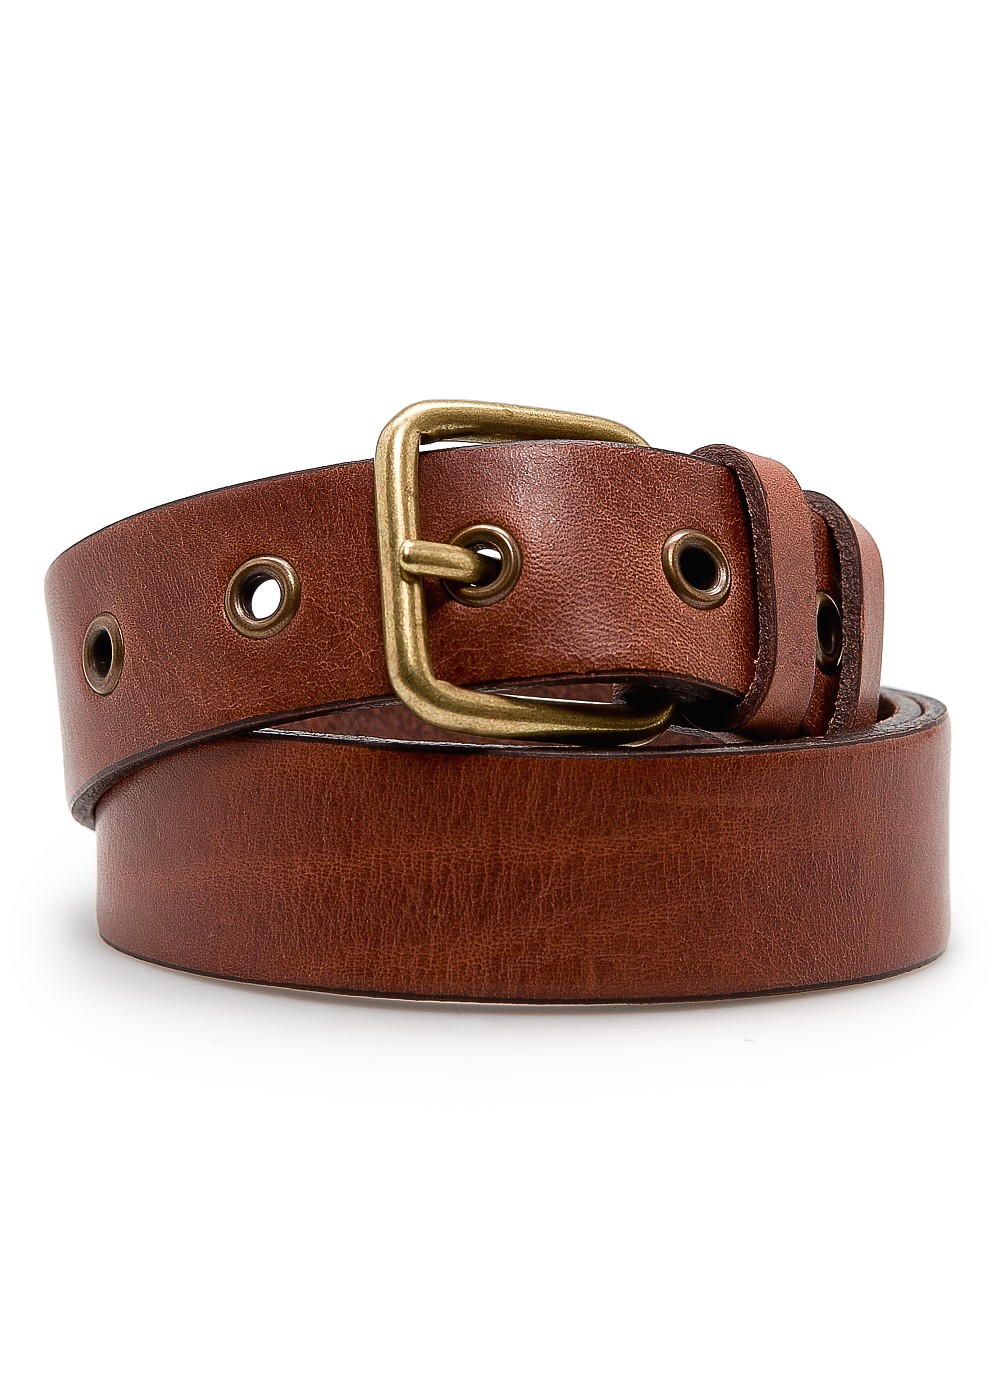 Lyst - Mango Rivets Leather Belt in Brown